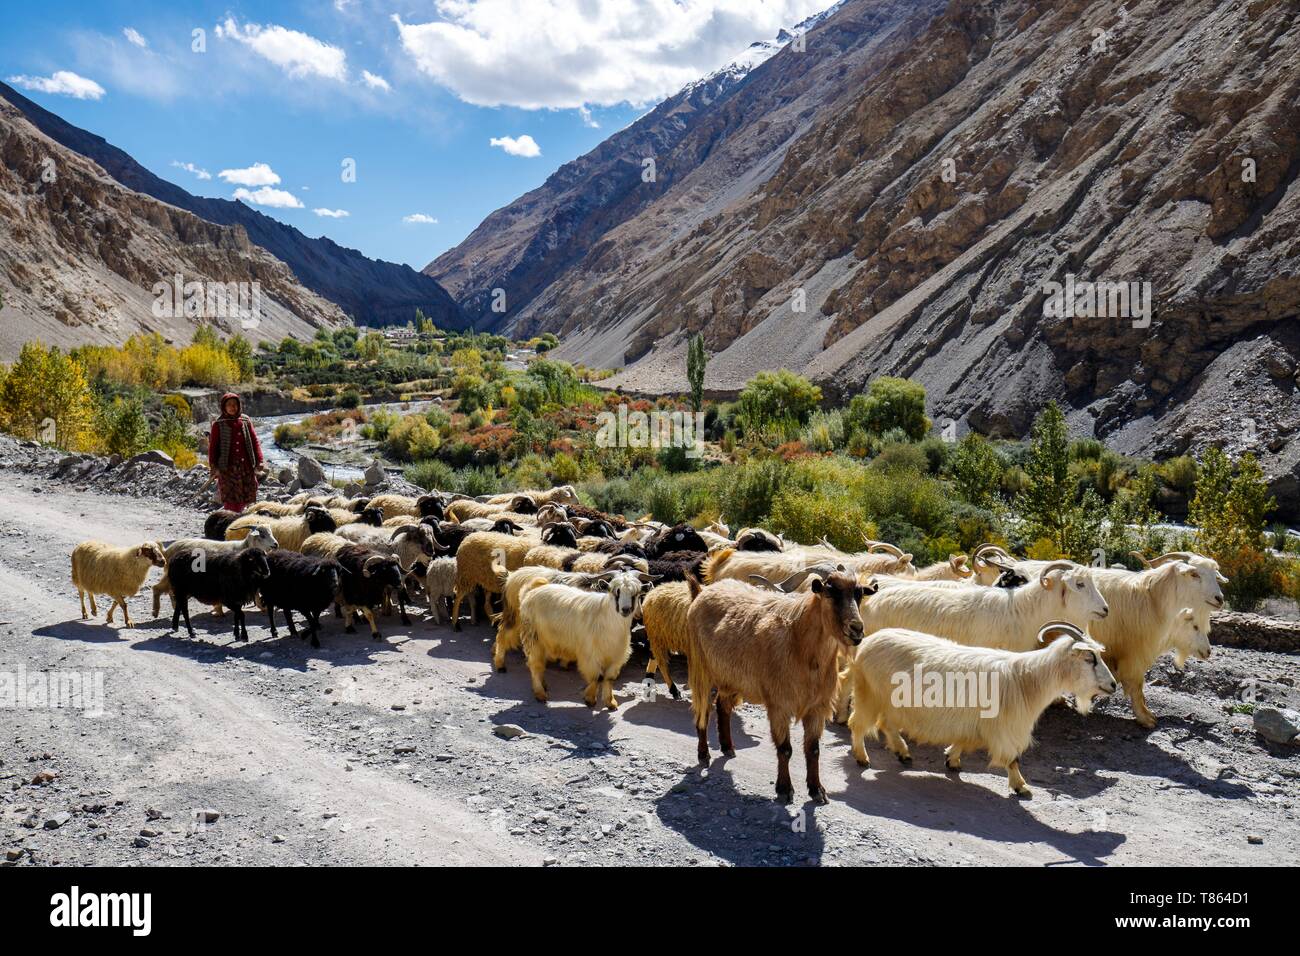 India, state of Jammu and Kashmir, Himalaya, Ladakh, Hemis